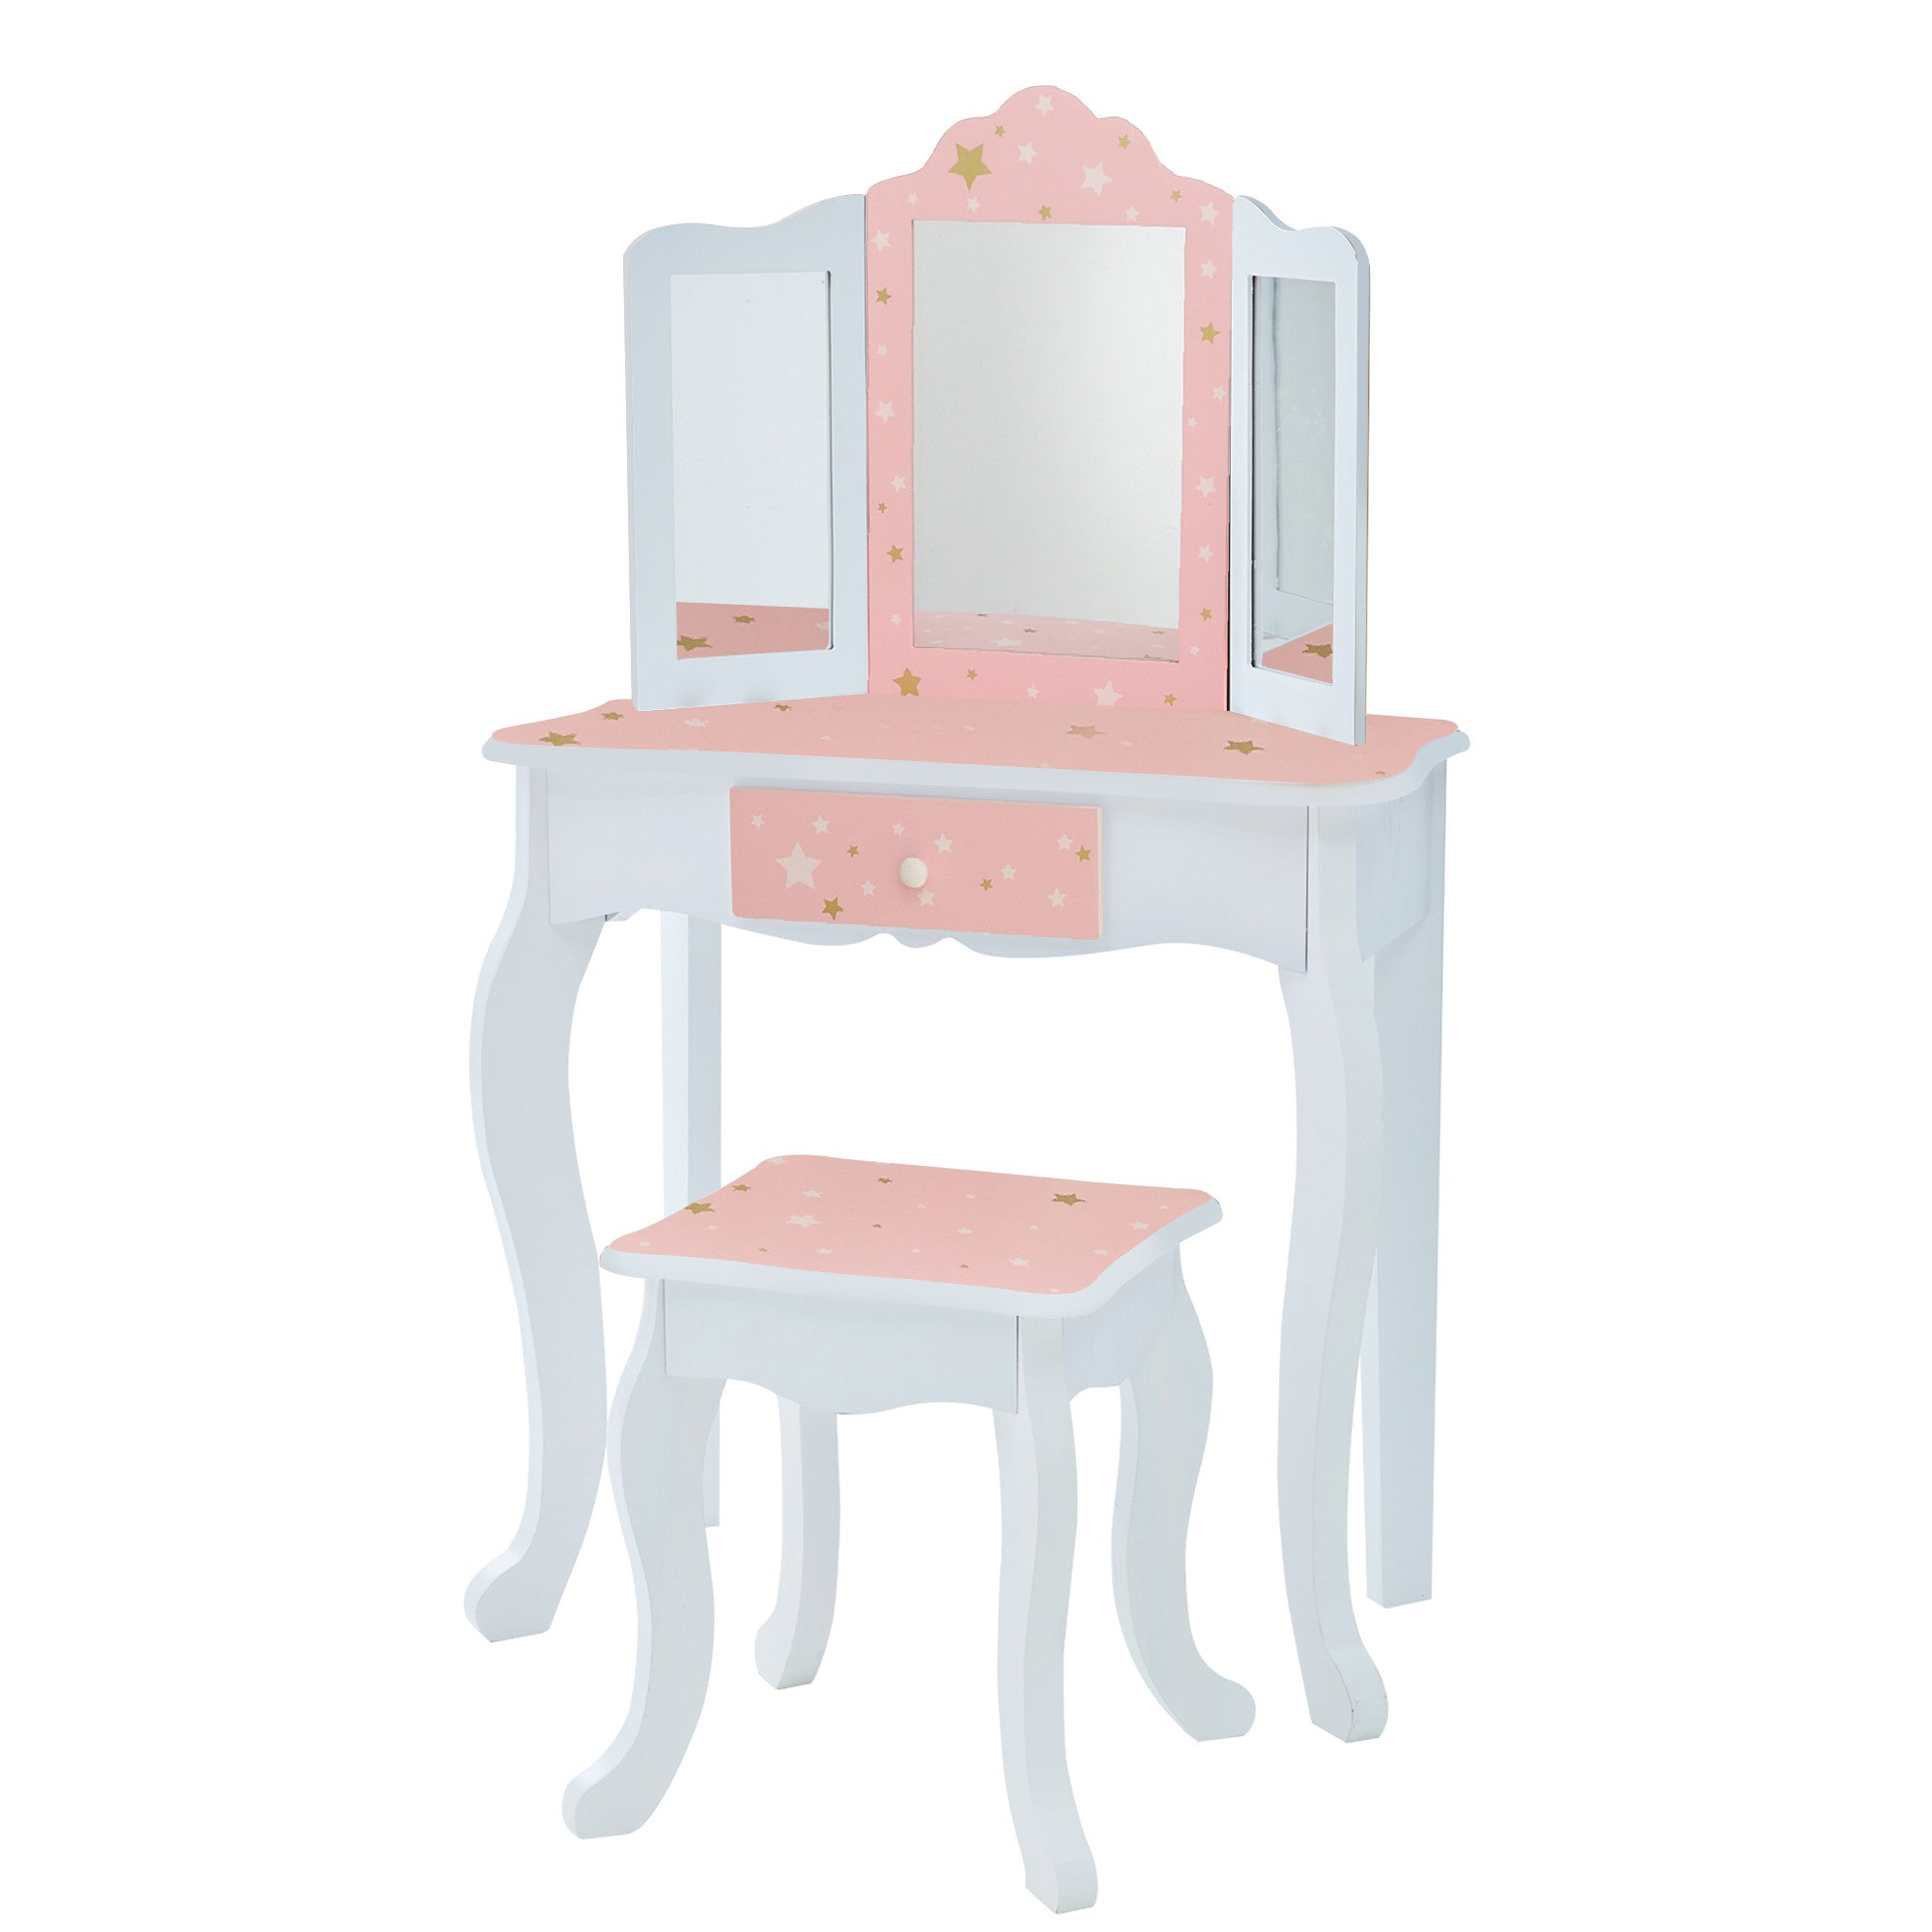 Teamson Kids - Fashion Twinkle Star Prints Gisele Play Vanity Set - Pink / White